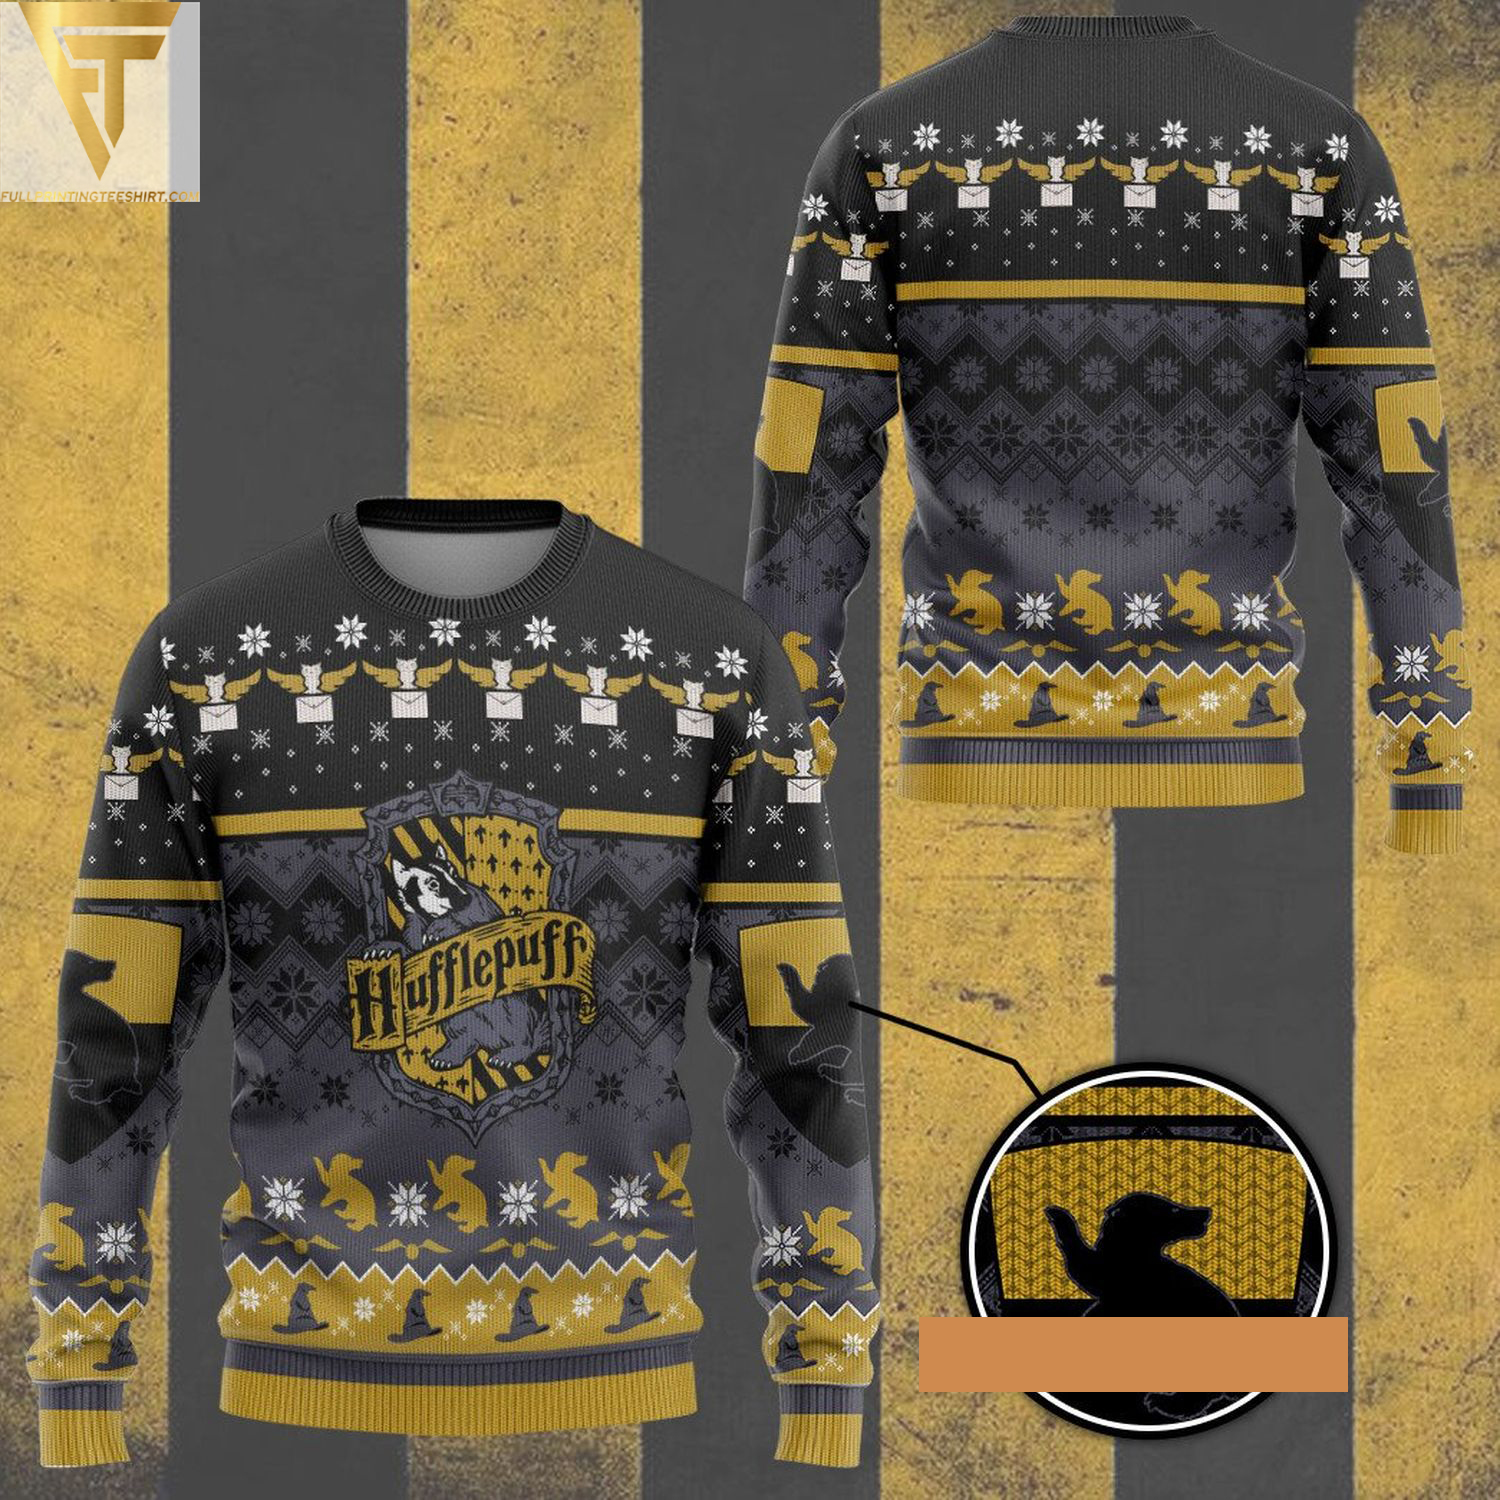 Harry potter hufflepuff house ugly christmas sweater - Copy (2)